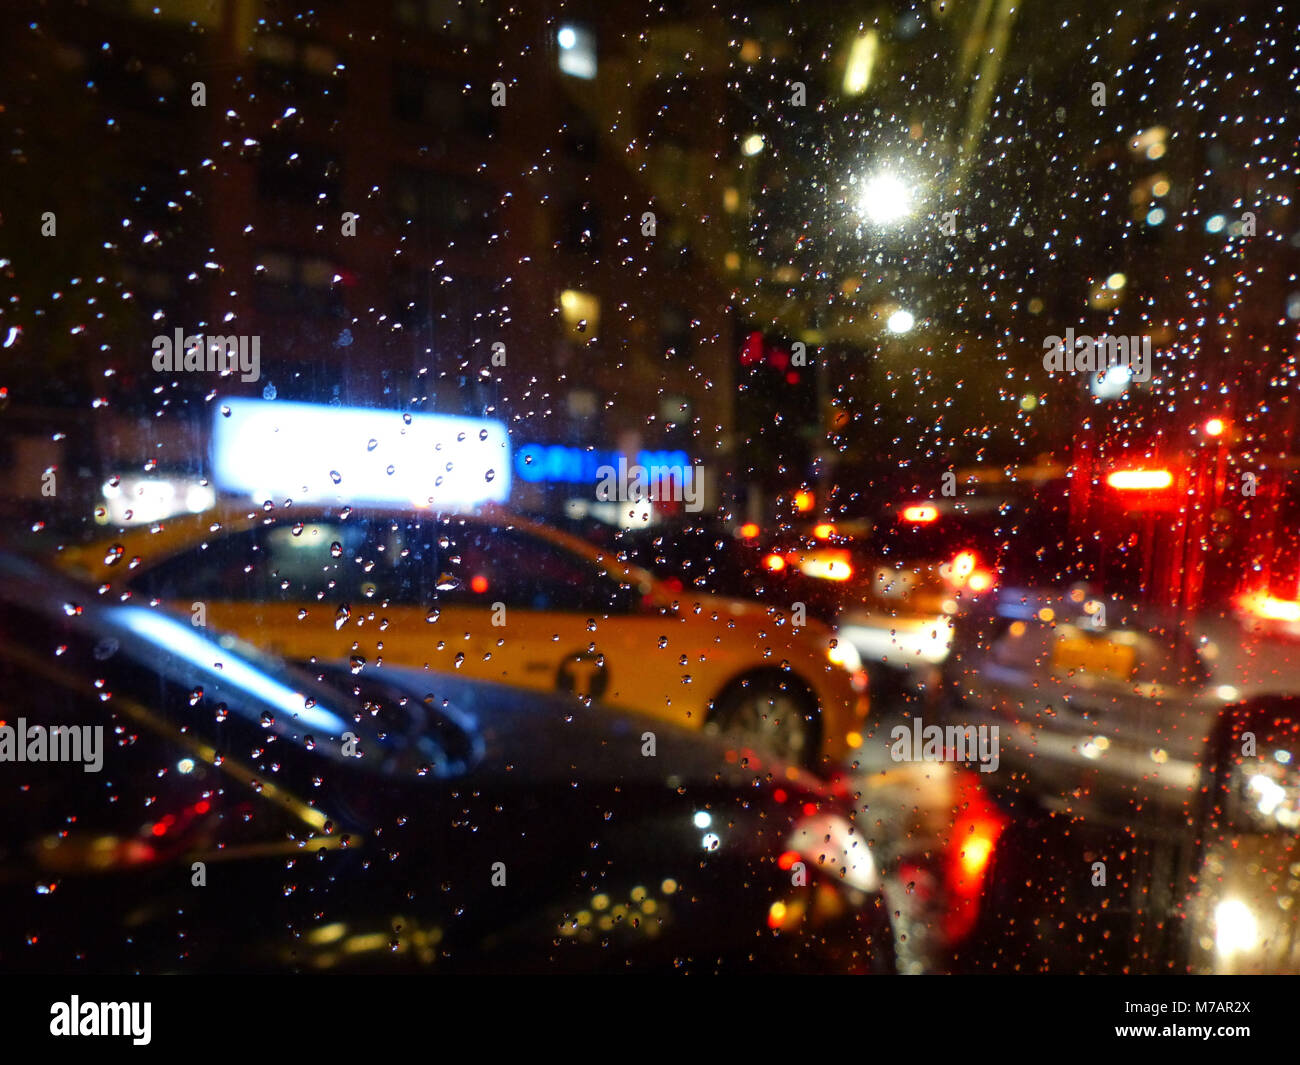 Street, traffic, car, rain drops on driver's side window, New York in rain Stock Photo